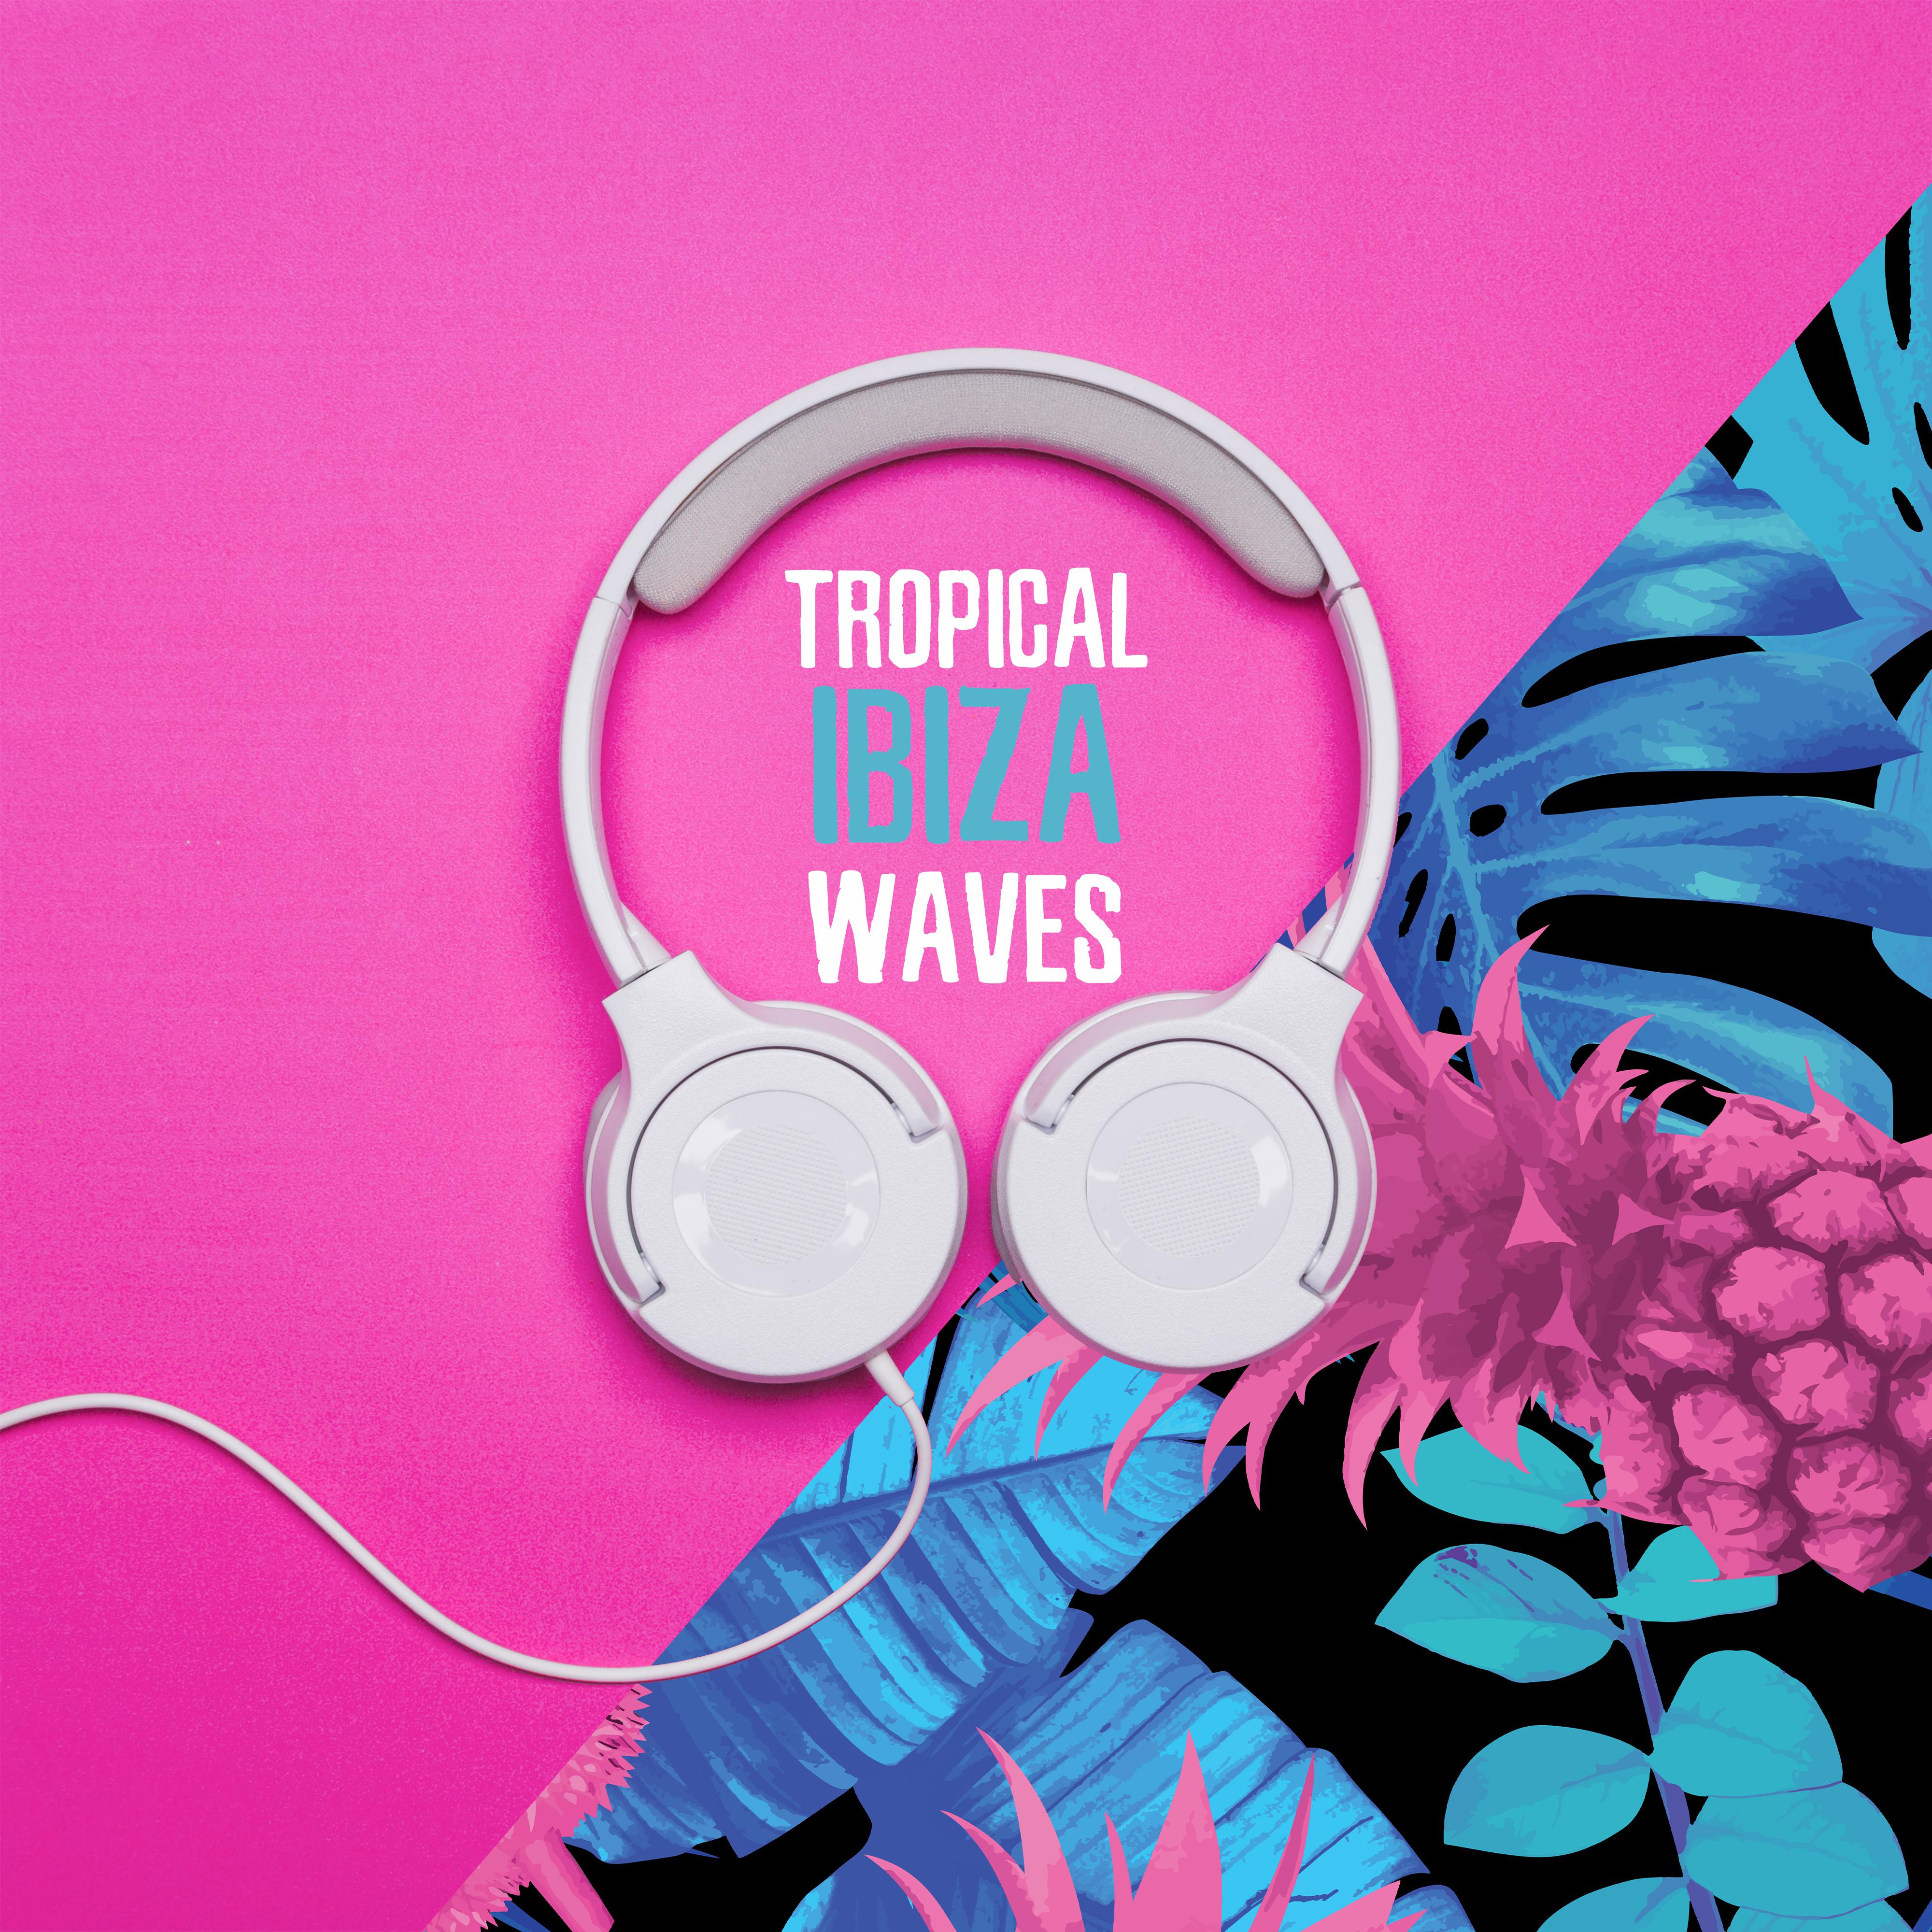 Tropical Ibiza Waves